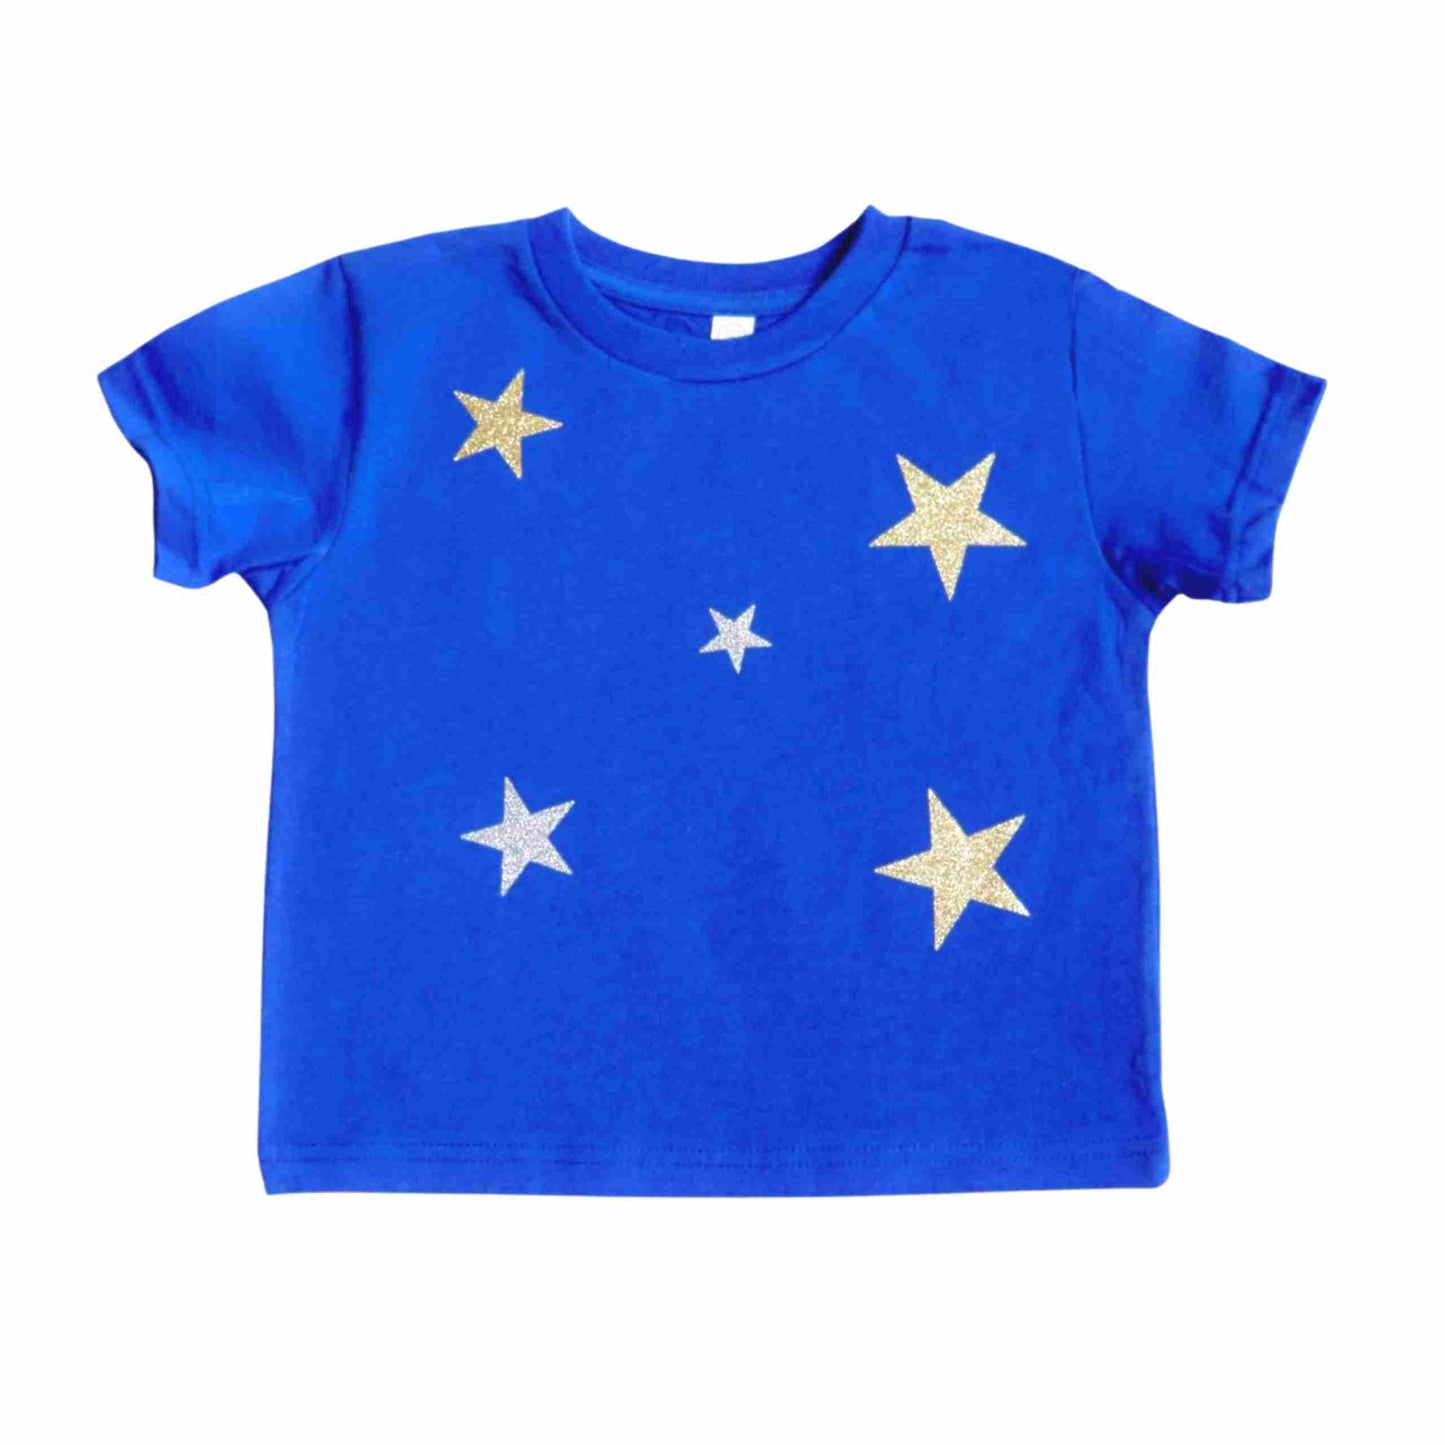 All Star Superhero T-Shirt, Blue